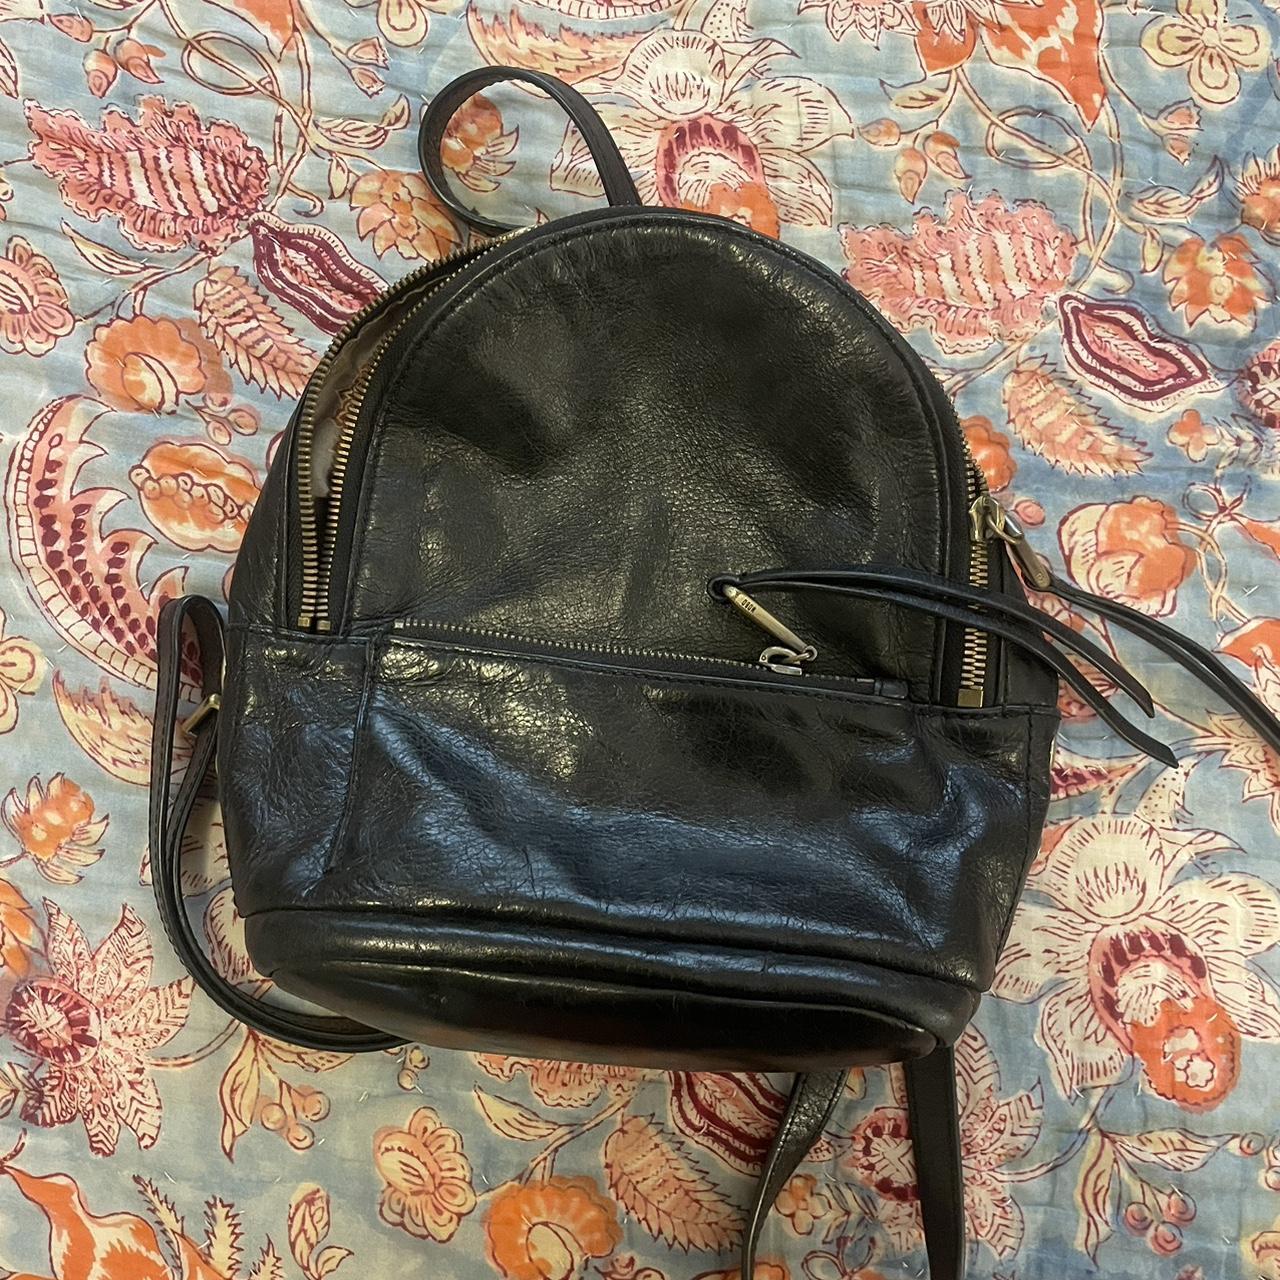 Hobo brand mini leather backpack. Originally $200.